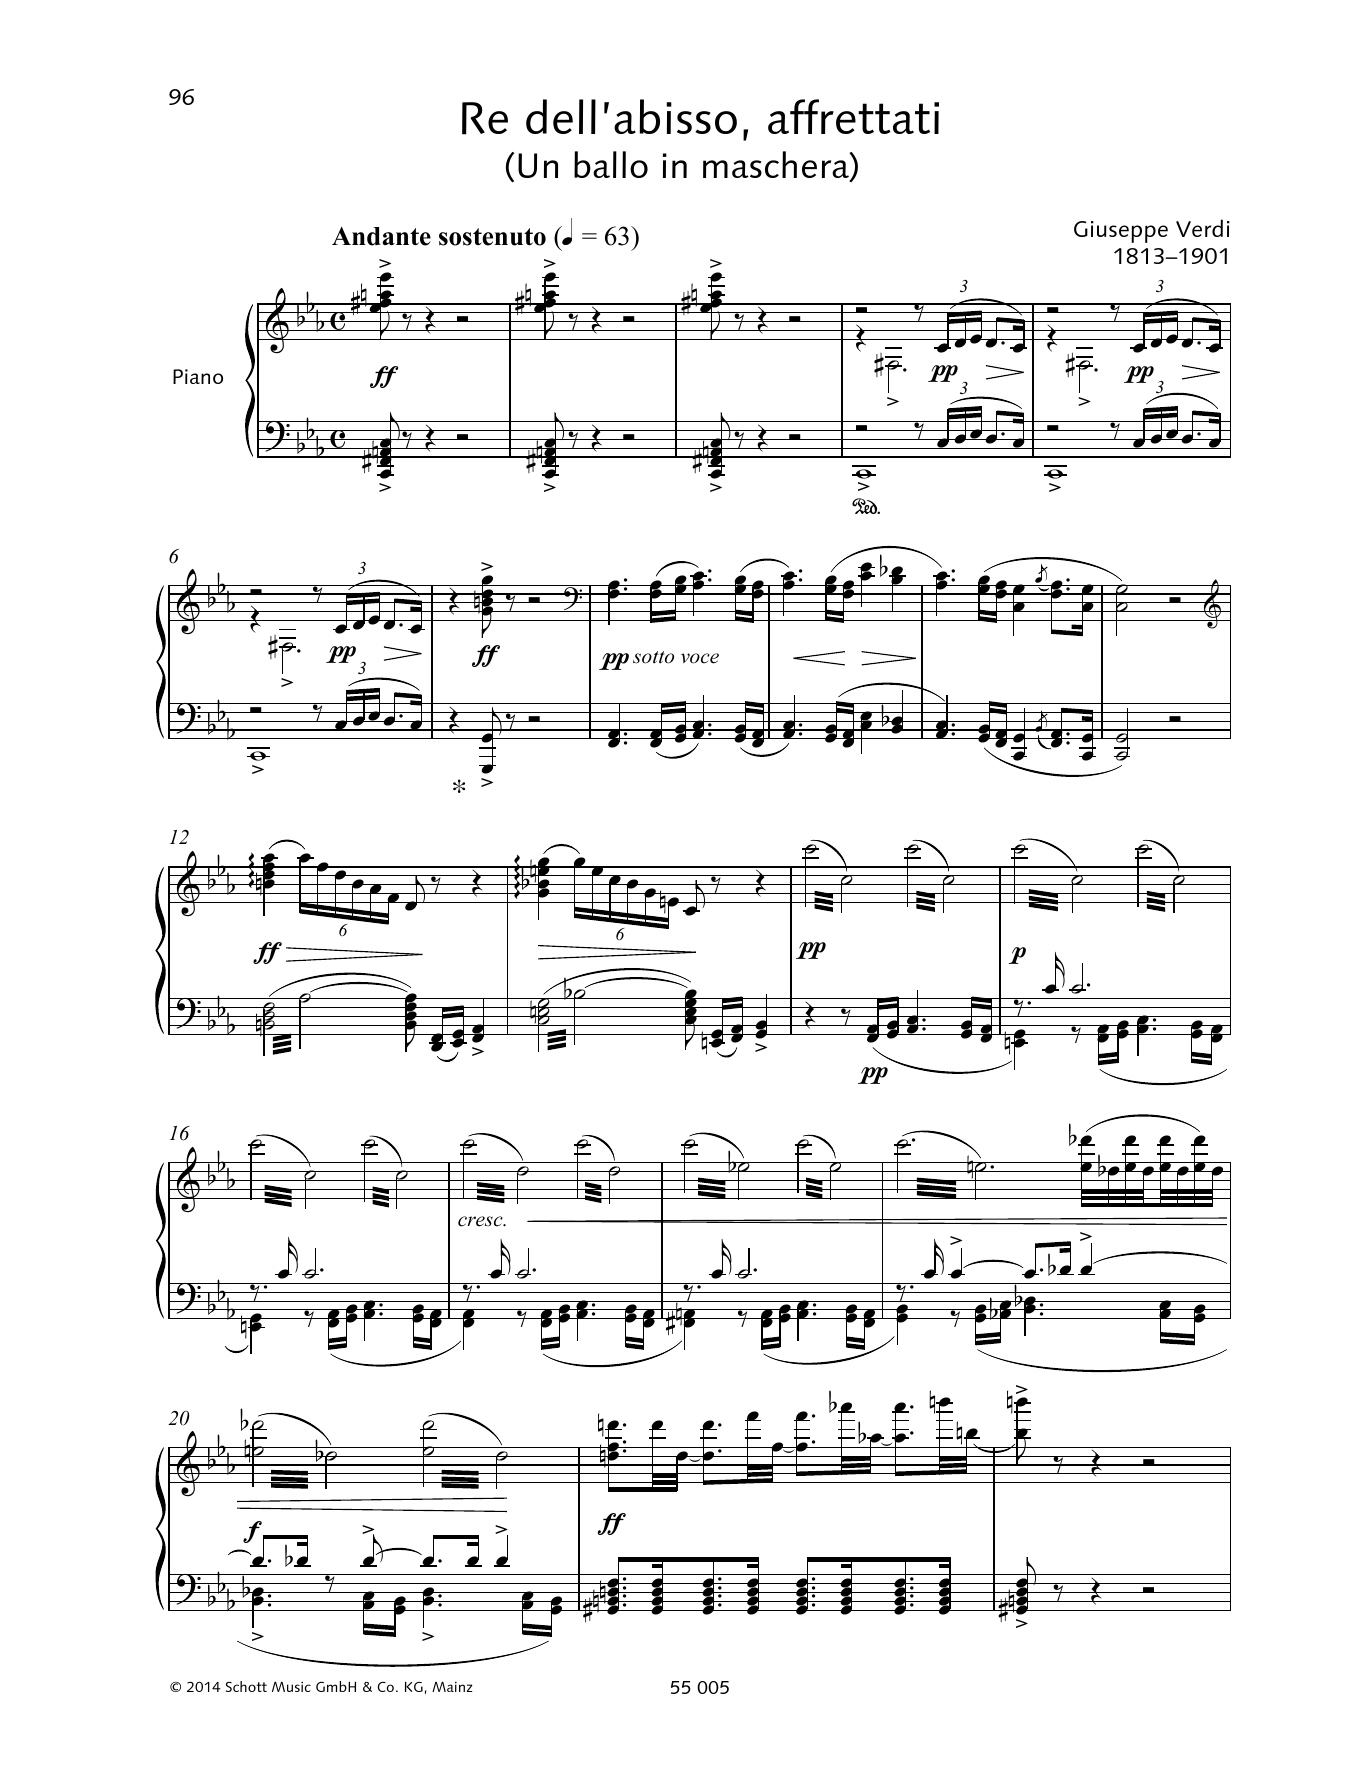 Giuseppe Verdi Re dell'abisso, affrettati Sheet Music Notes & Chords for Piano & Vocal - Download or Print PDF